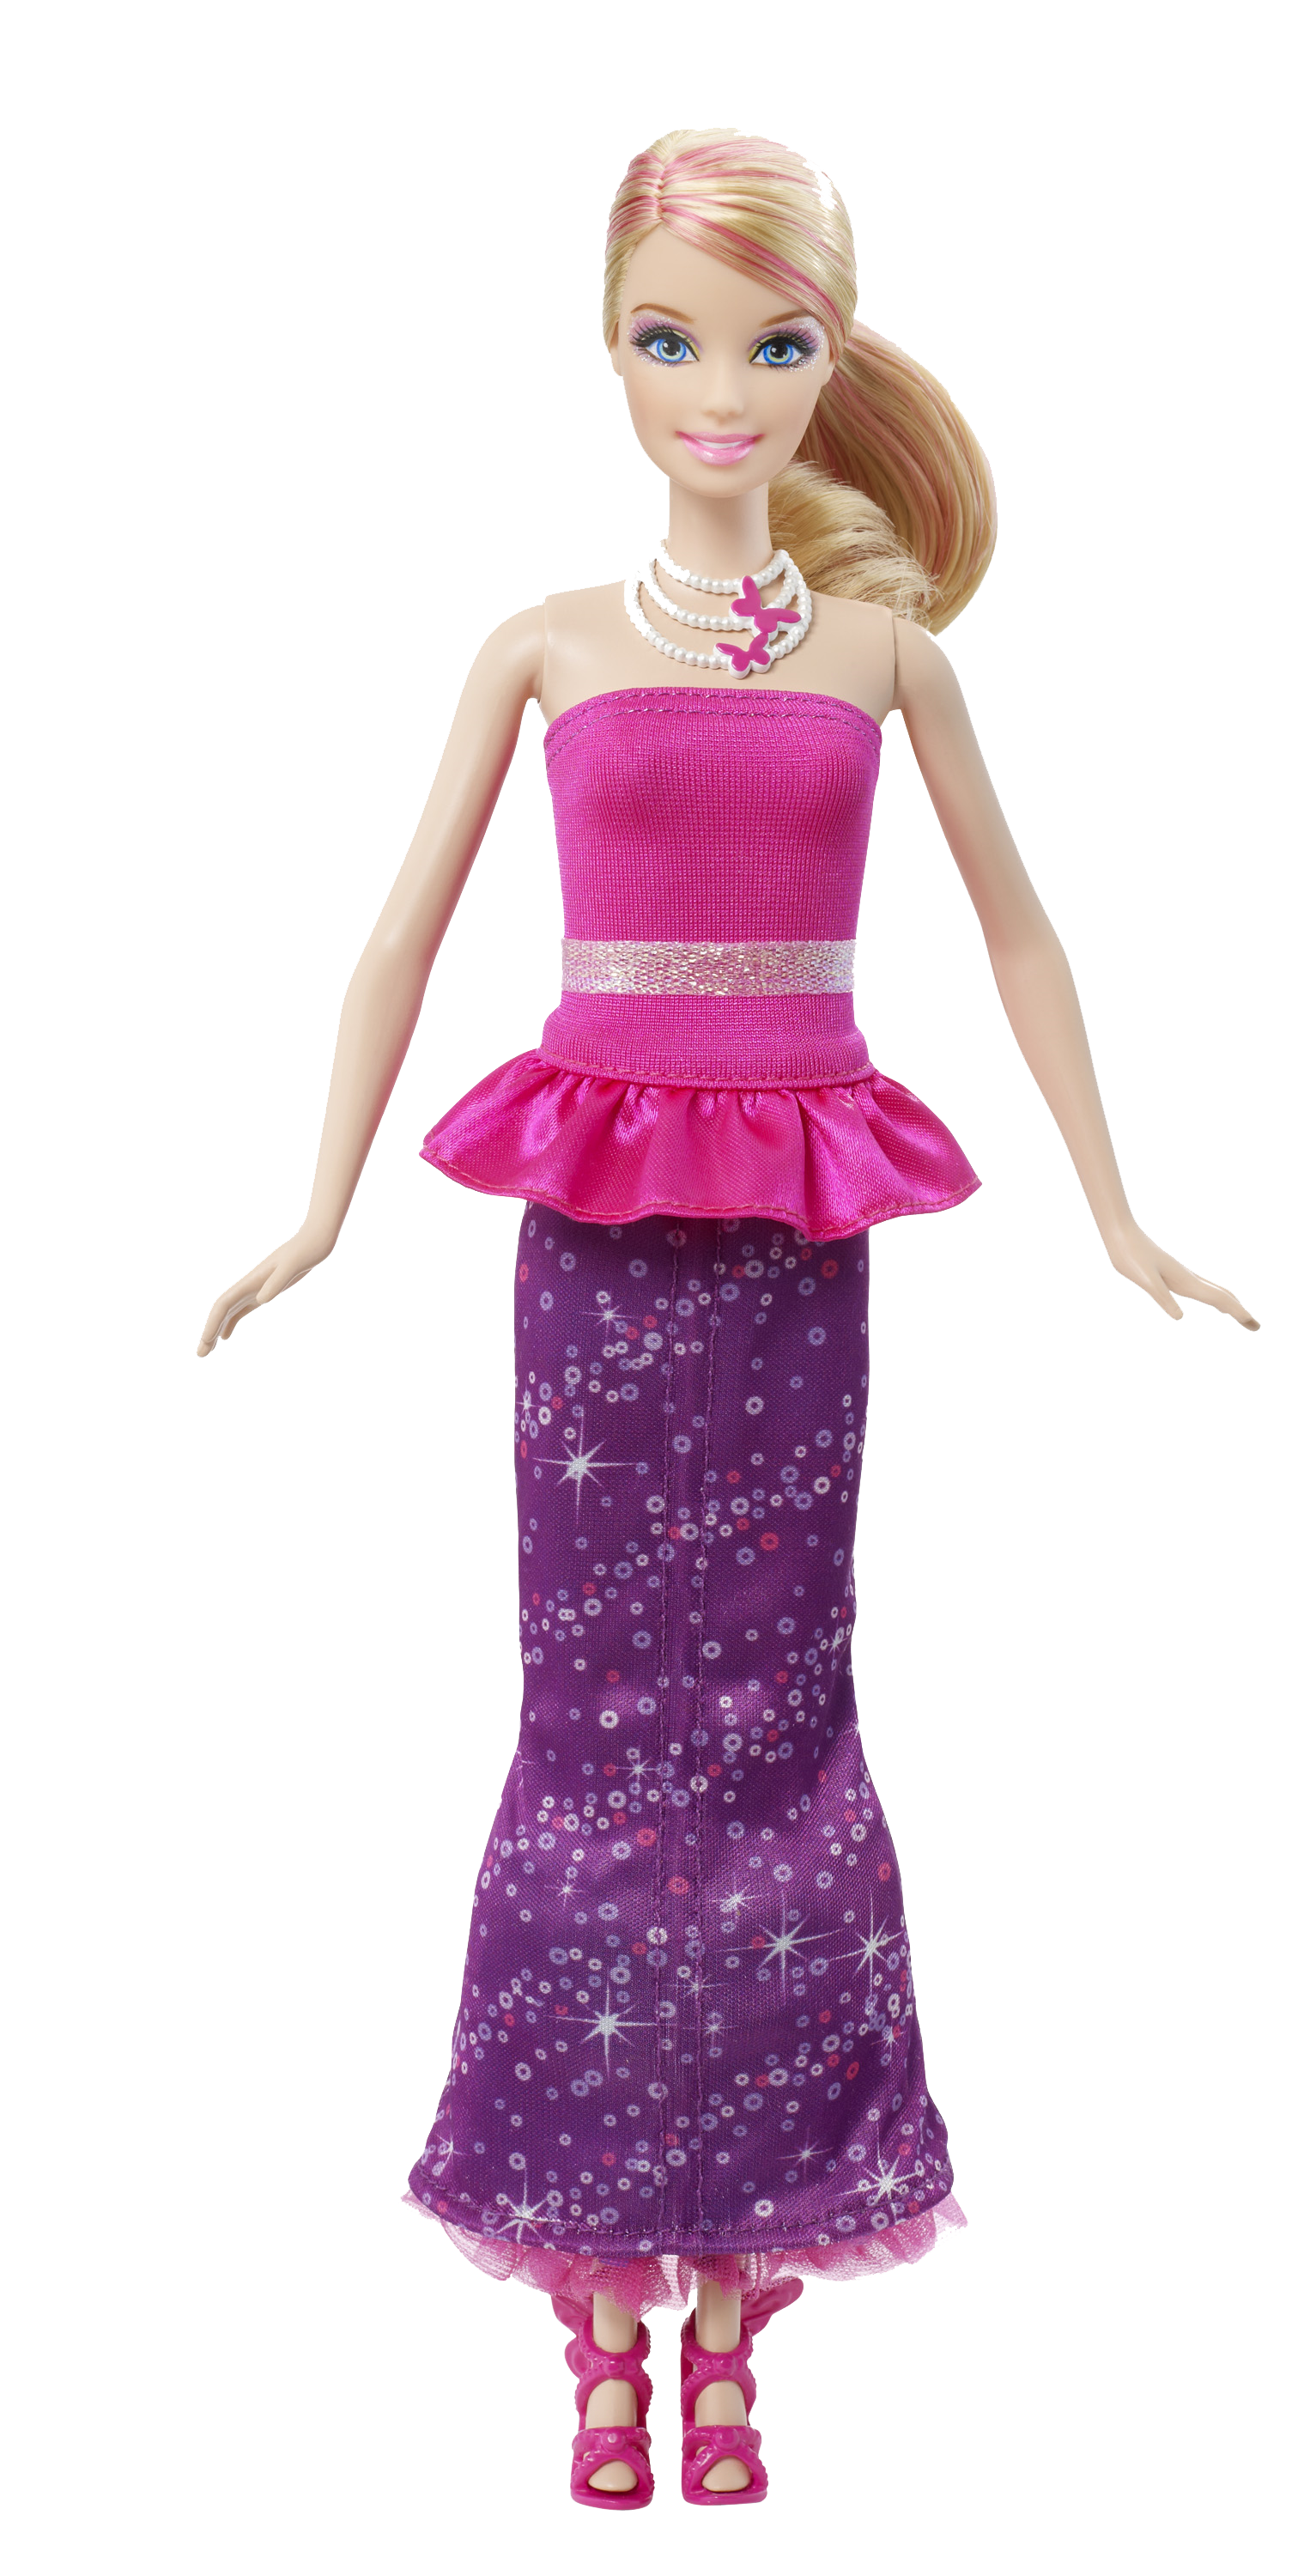 Barbie Doll PNG Transparent Images | PNG All